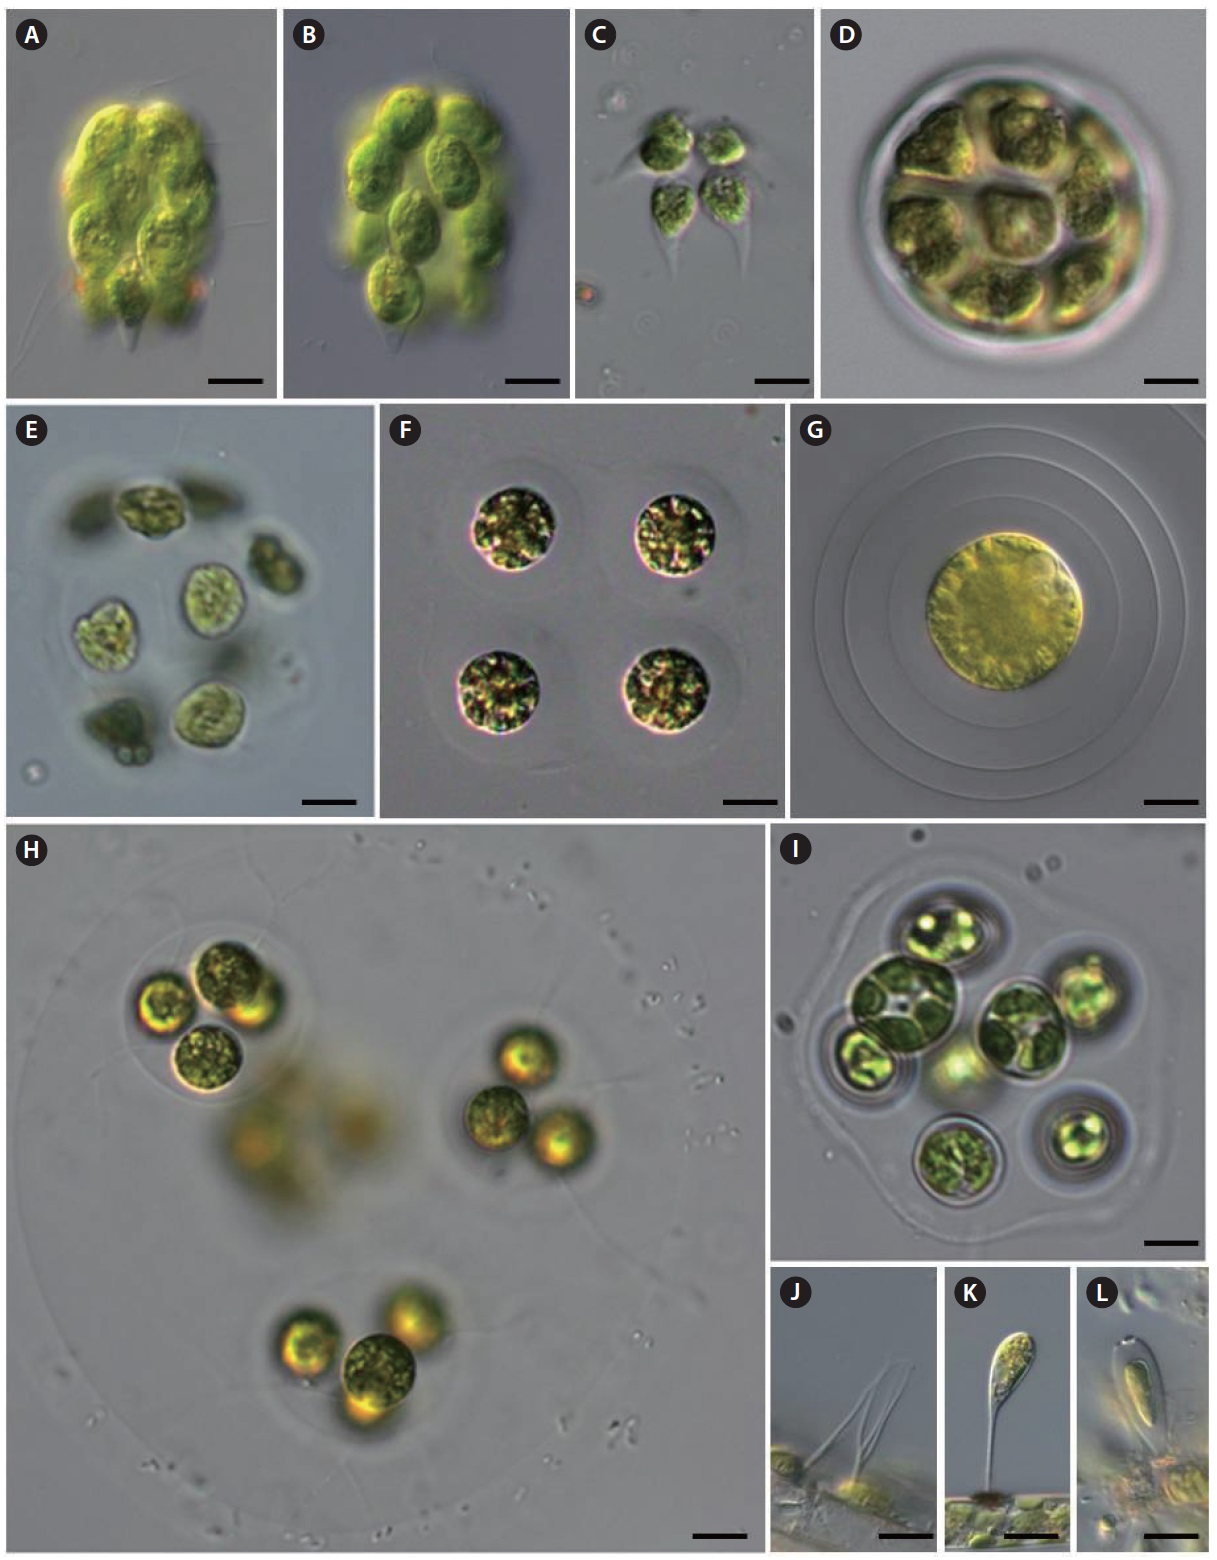 (A, B) Pyrobotrys crasinoensis, (C) P. squarrosa, (D, E) Volvulina steinii, (F, G) Asterococcus superbus, (H) Paulschulzia pseudovolvox, (I) Planktosphaeria gelatinosa, (J) Dicranochaete reniformis, (K) Characium guttula, (L) Pseudocharacium obtusum. Scale bars, 10 μm.